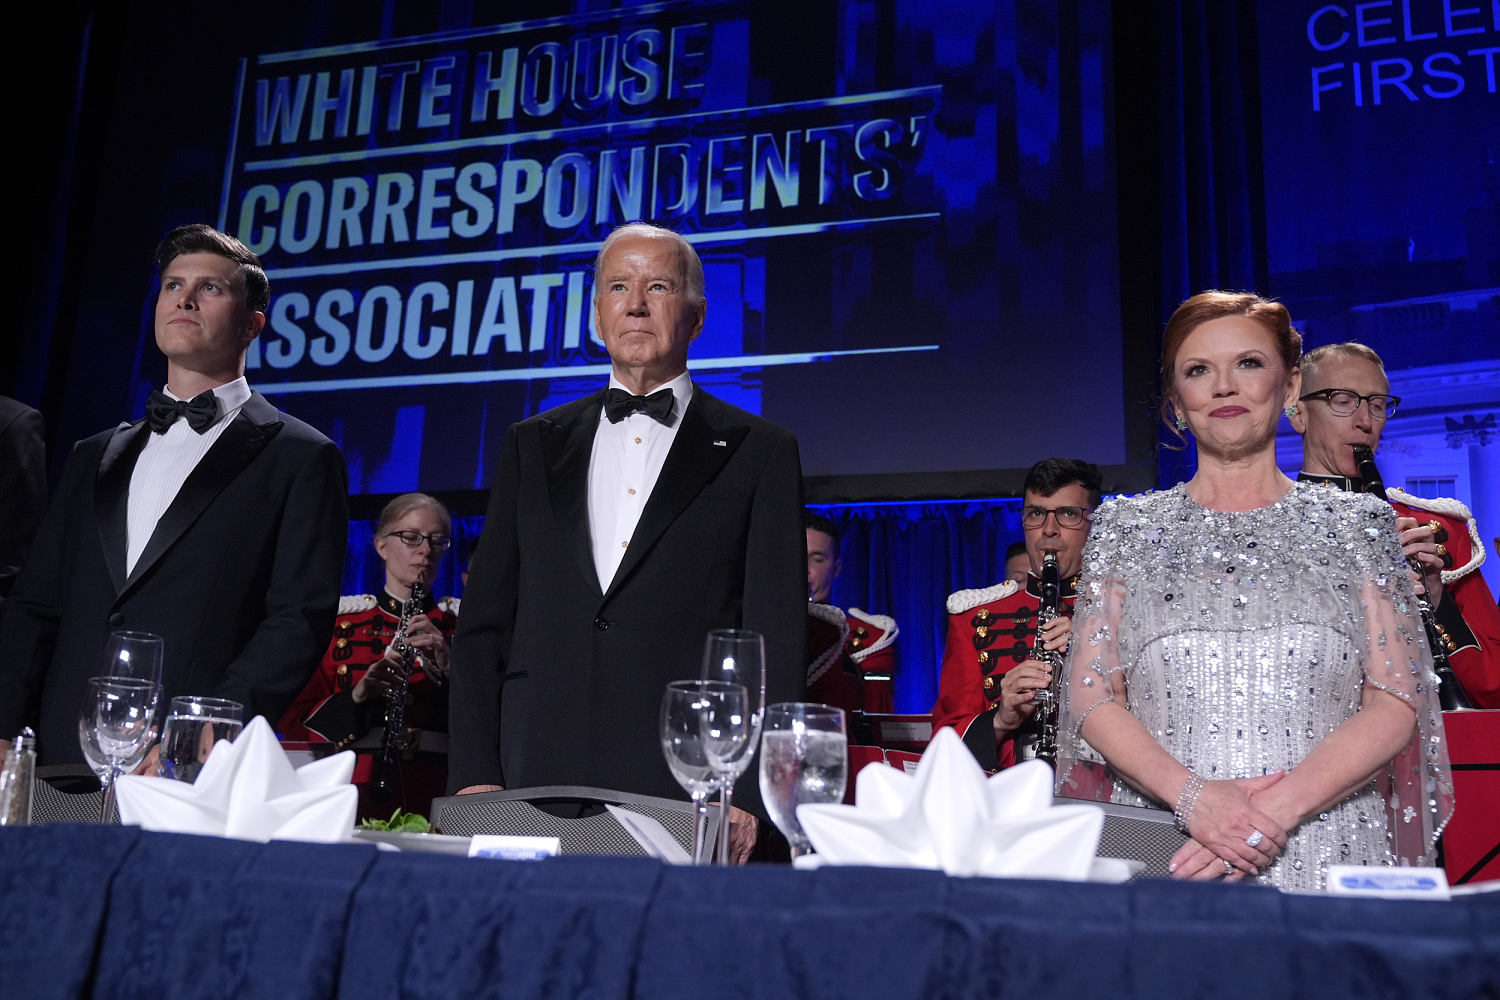 biden swipes at trump at white house correspondents' dinner